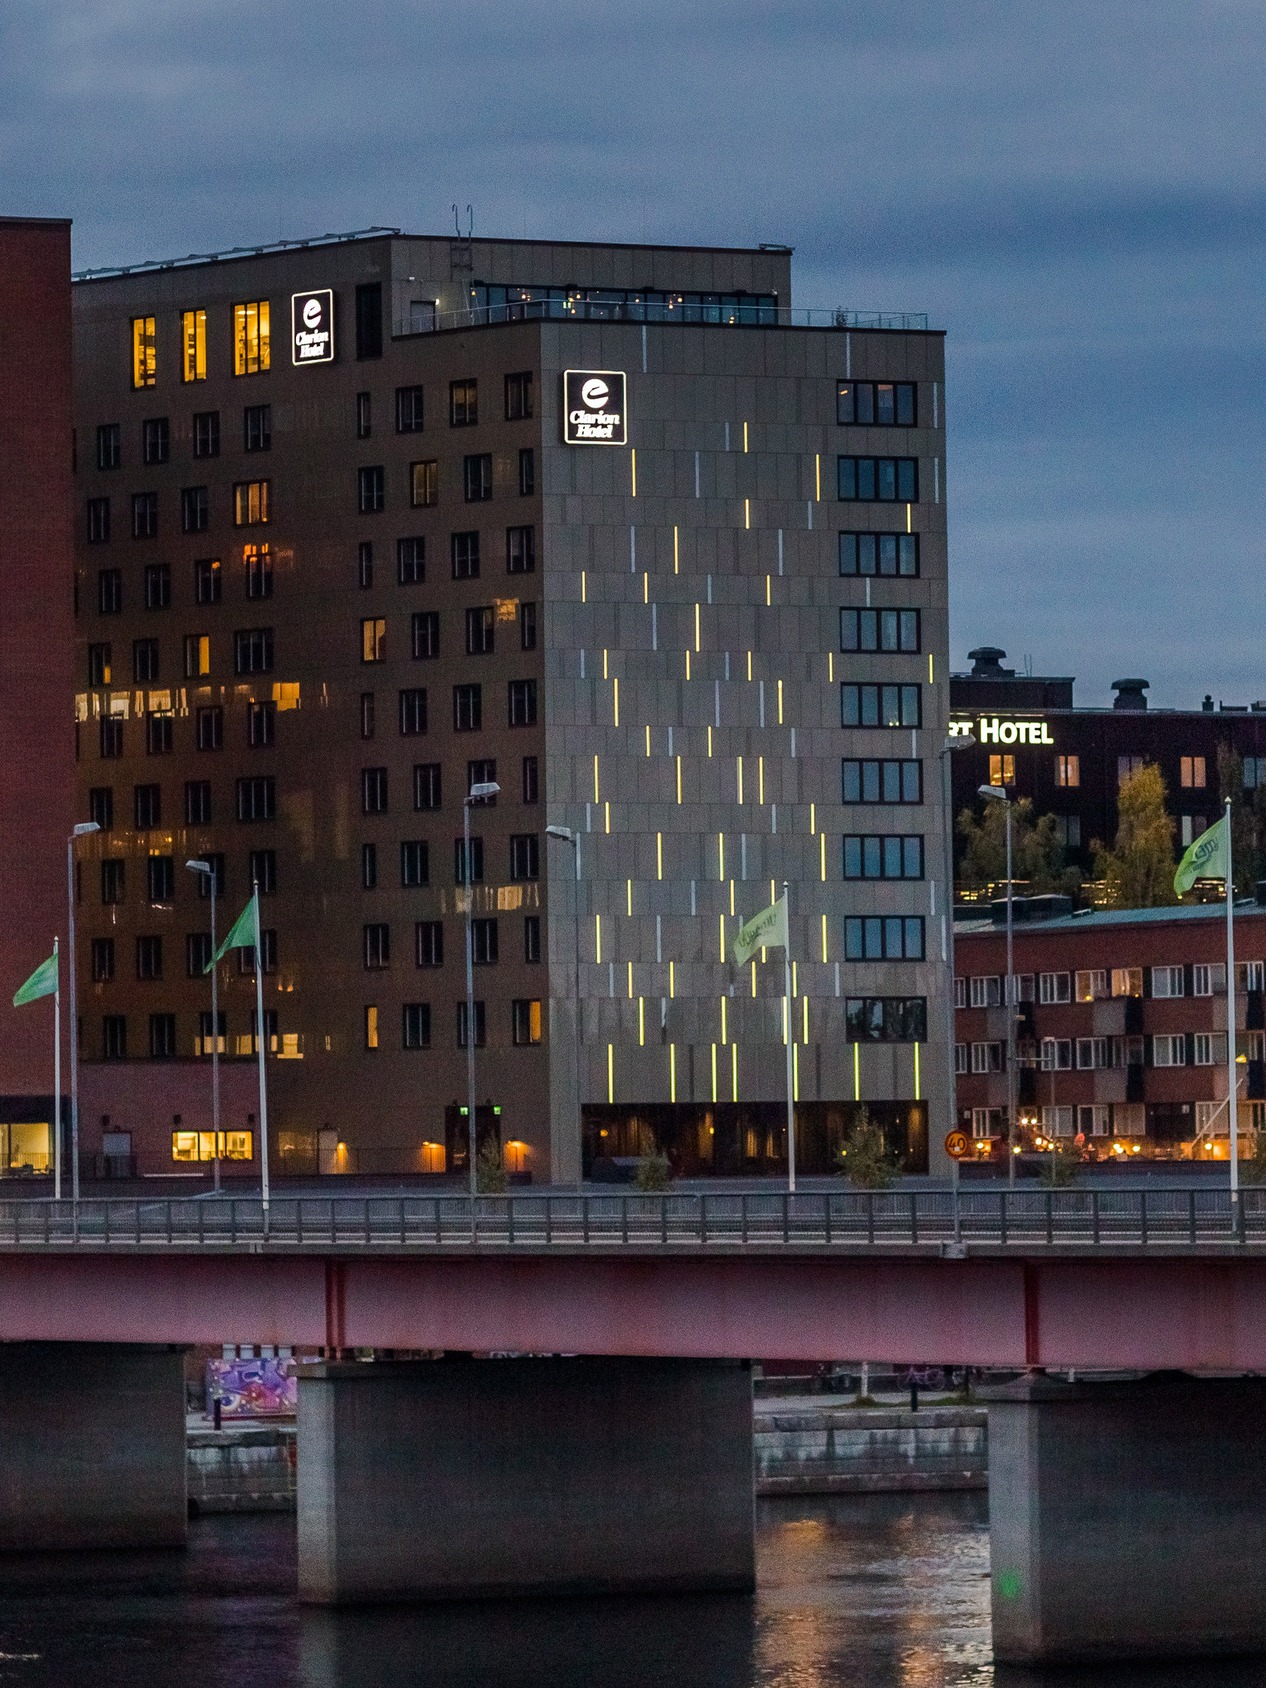 Clarion Hotel® Umeås fasad i skymning.